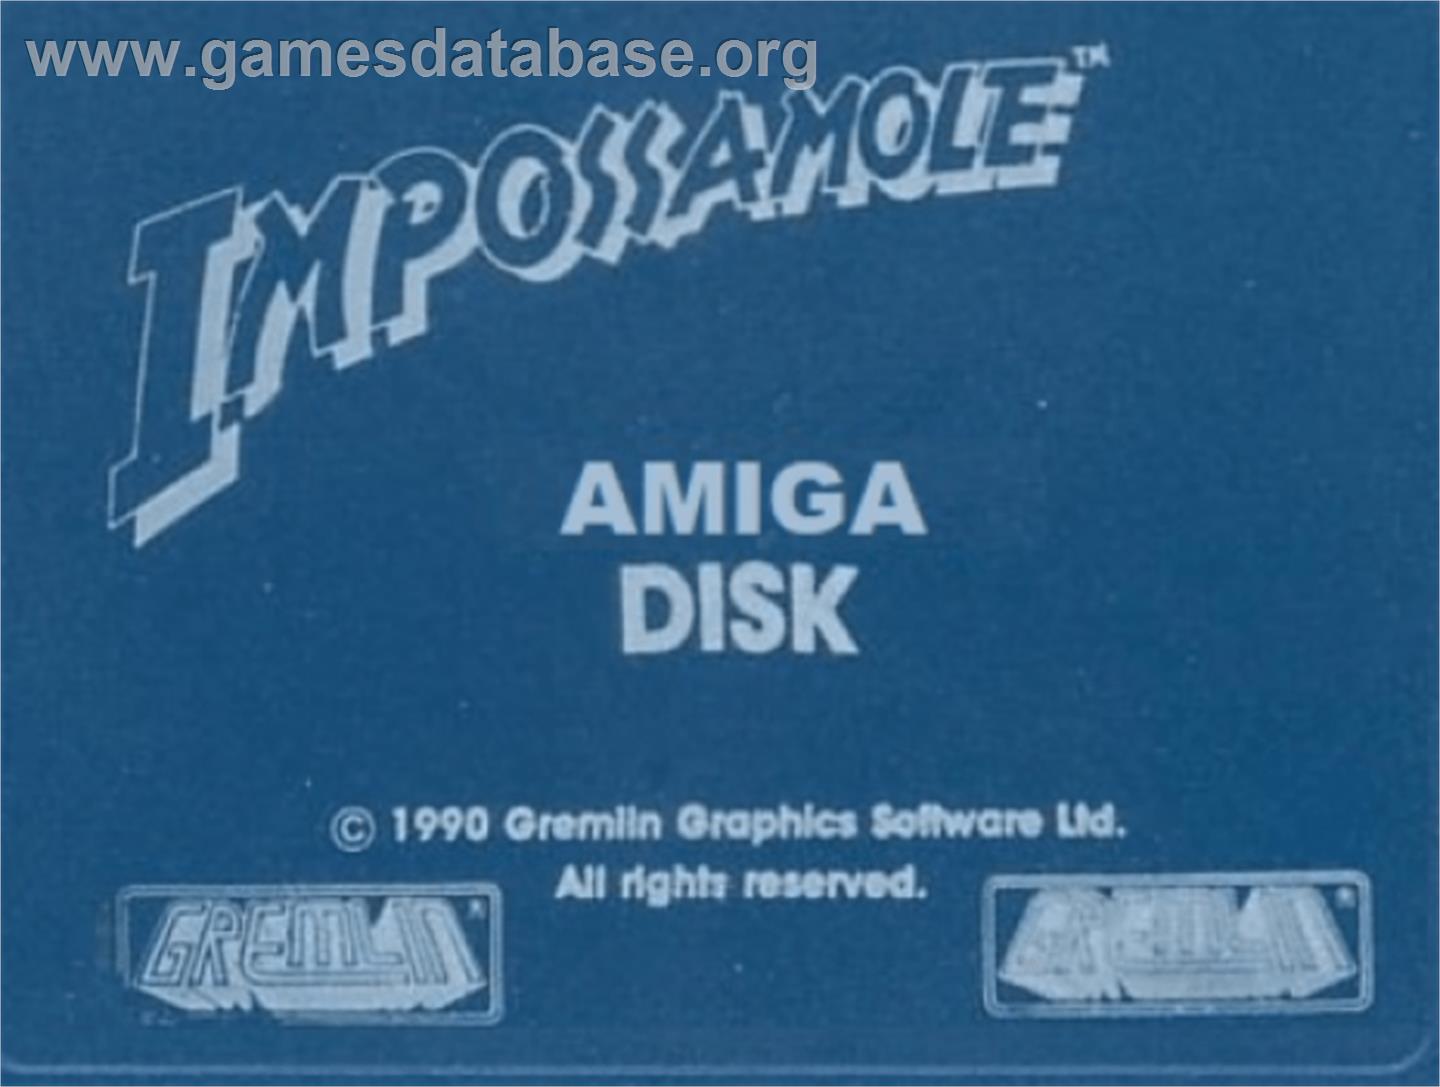 Impossamole - Commodore Amiga - Artwork - Cartridge Top